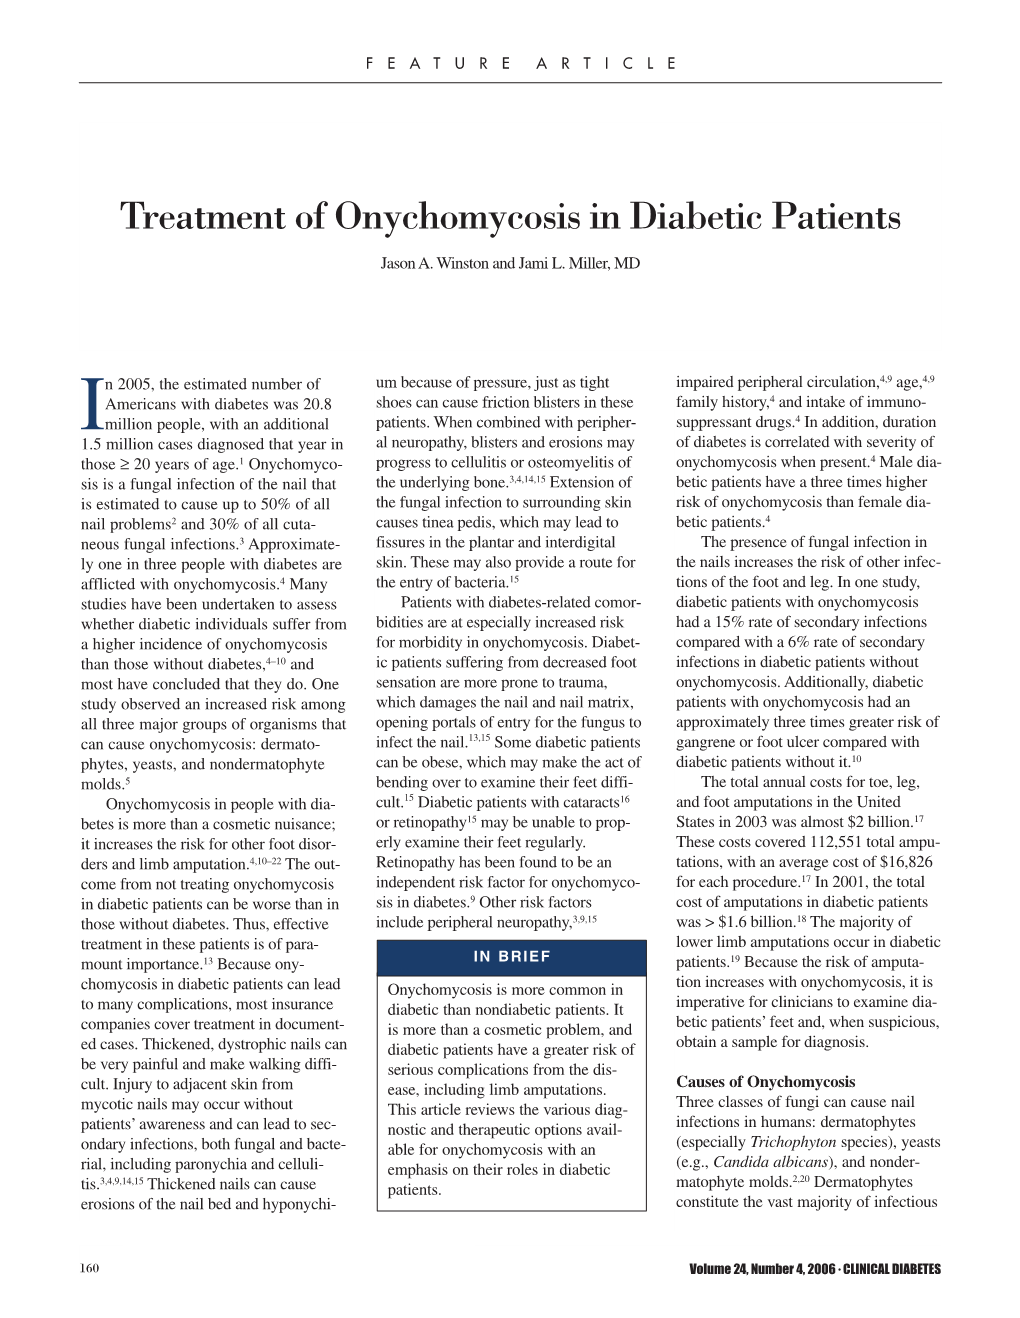 Treatment of Onychomycosis in Diabetic Patients